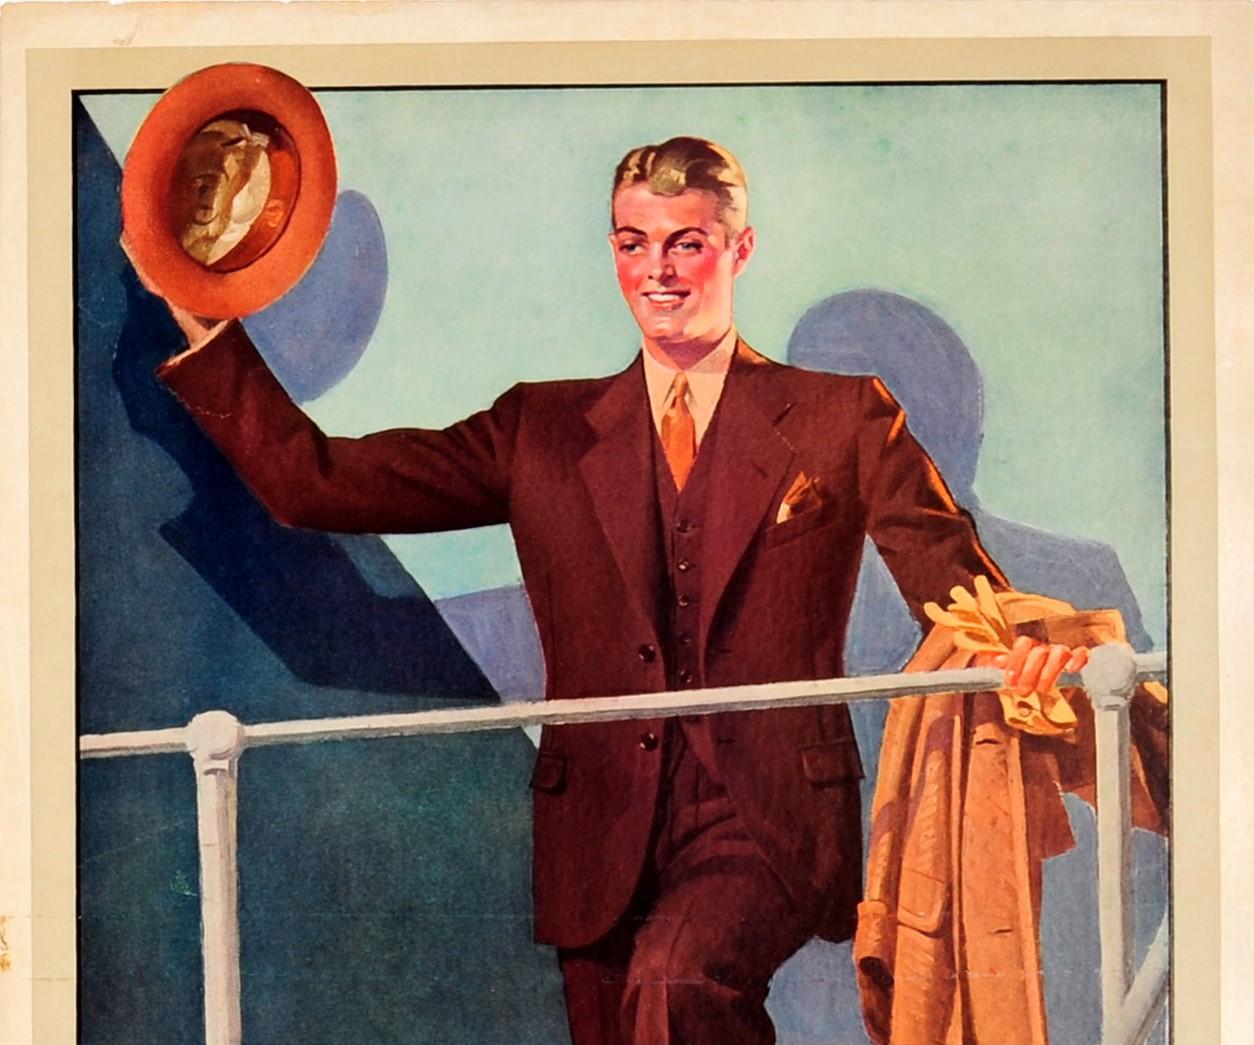  Original Vintage Men's Fashion Poster Schloss Bros & Co Baltimore New York Styl - Print by R. C. Kauffmann